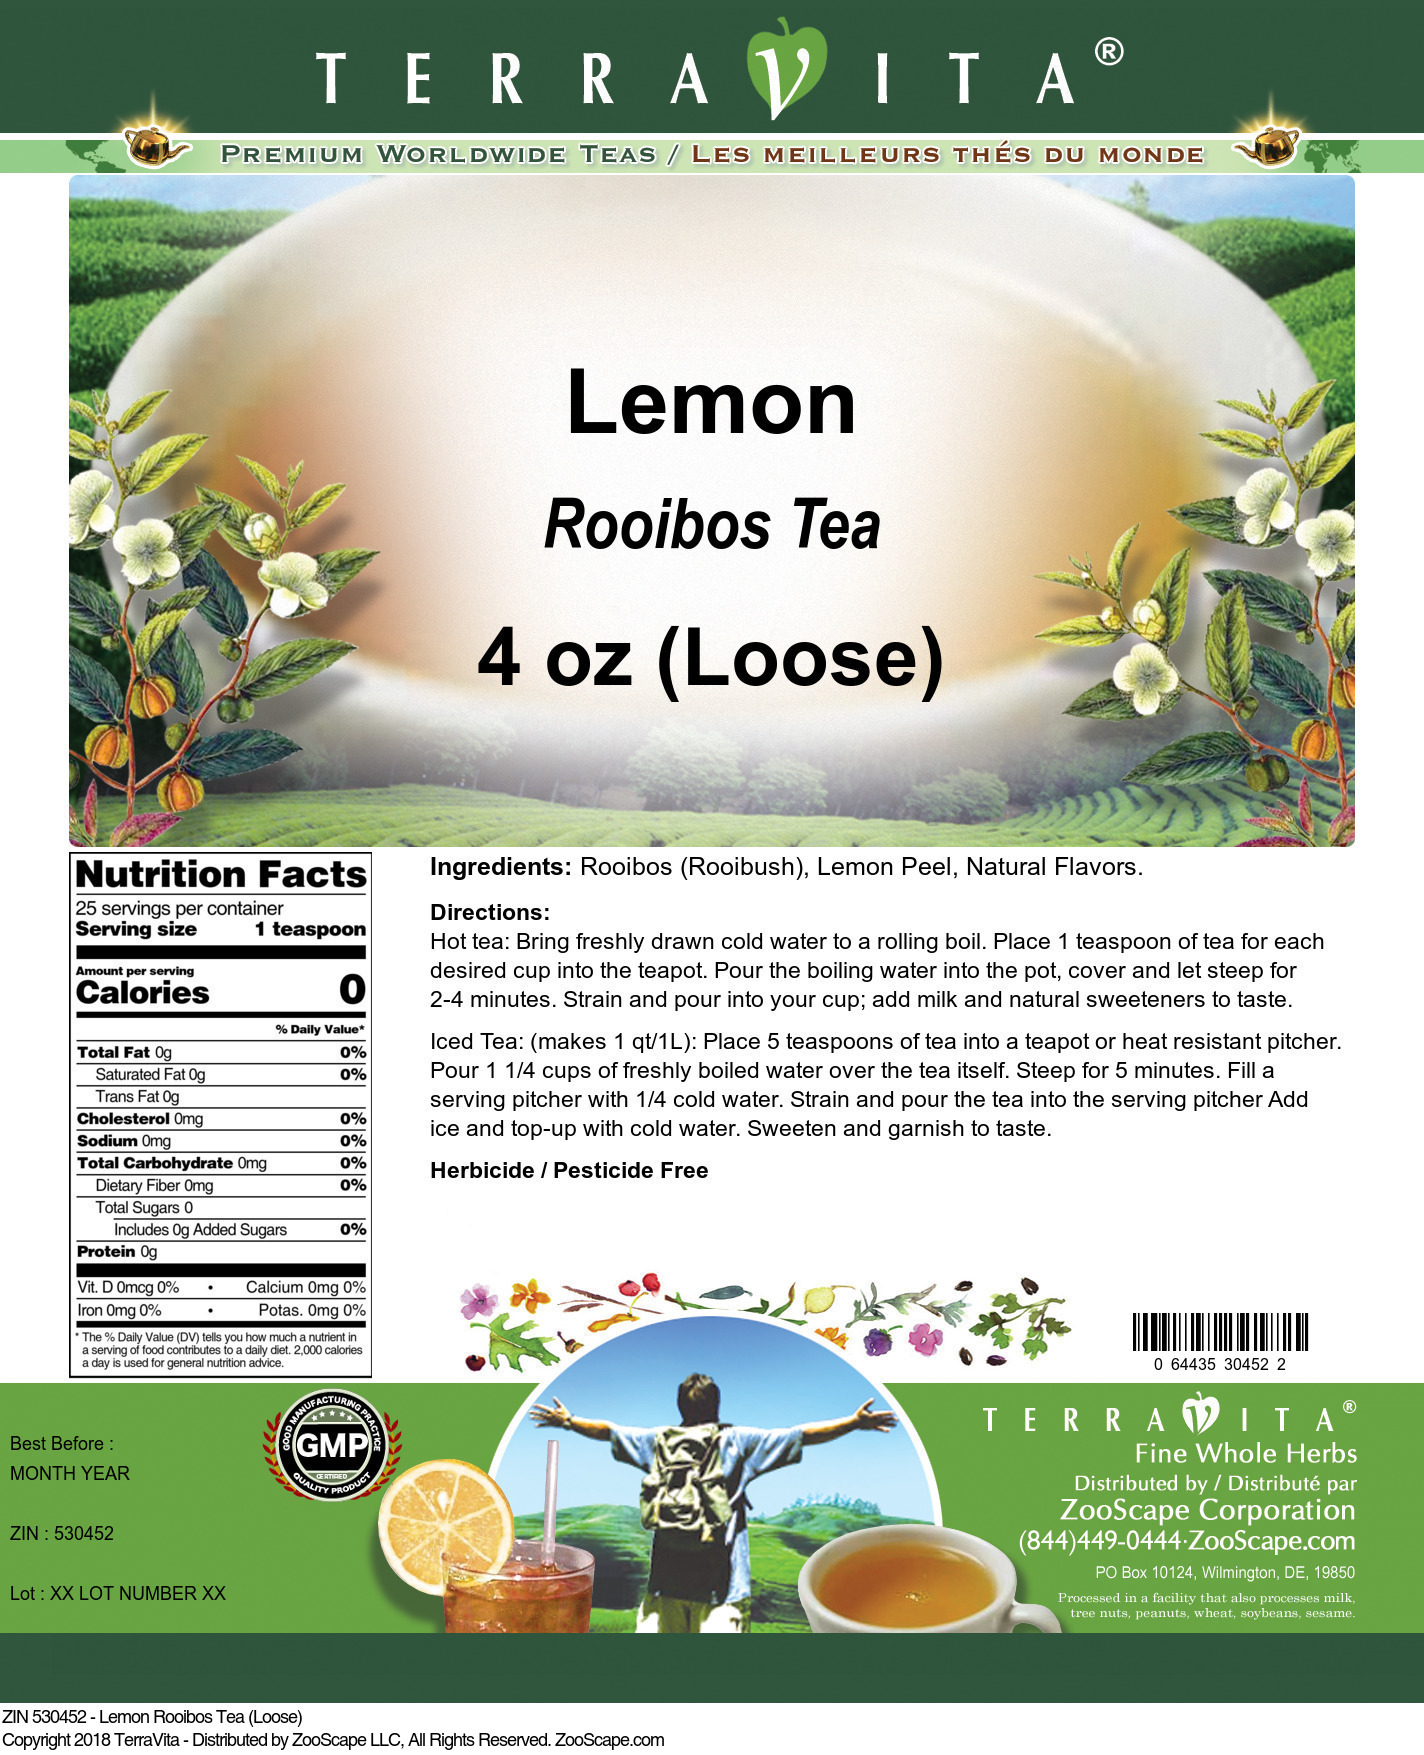 Lemon Rooibos Tea (Loose) - Label